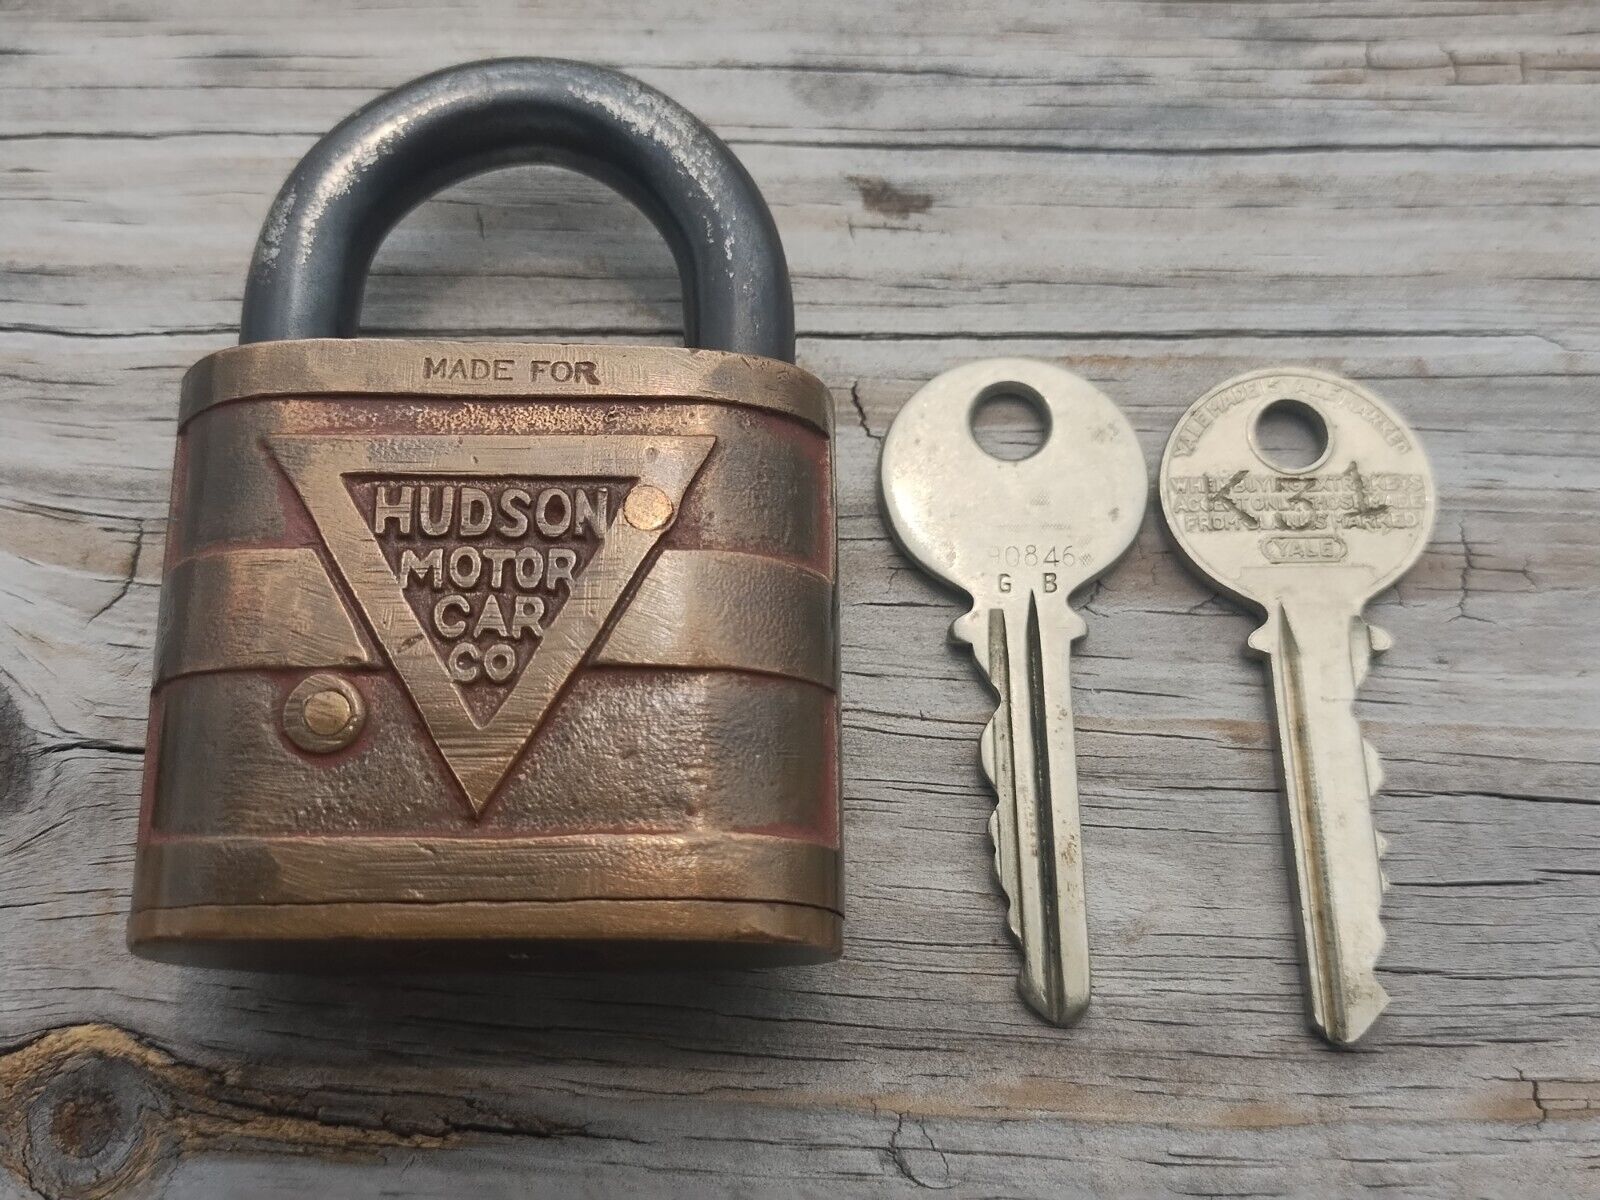 Vintage Yale Hudson Motor Car Company Padlock with 2 Original Numbered Keys